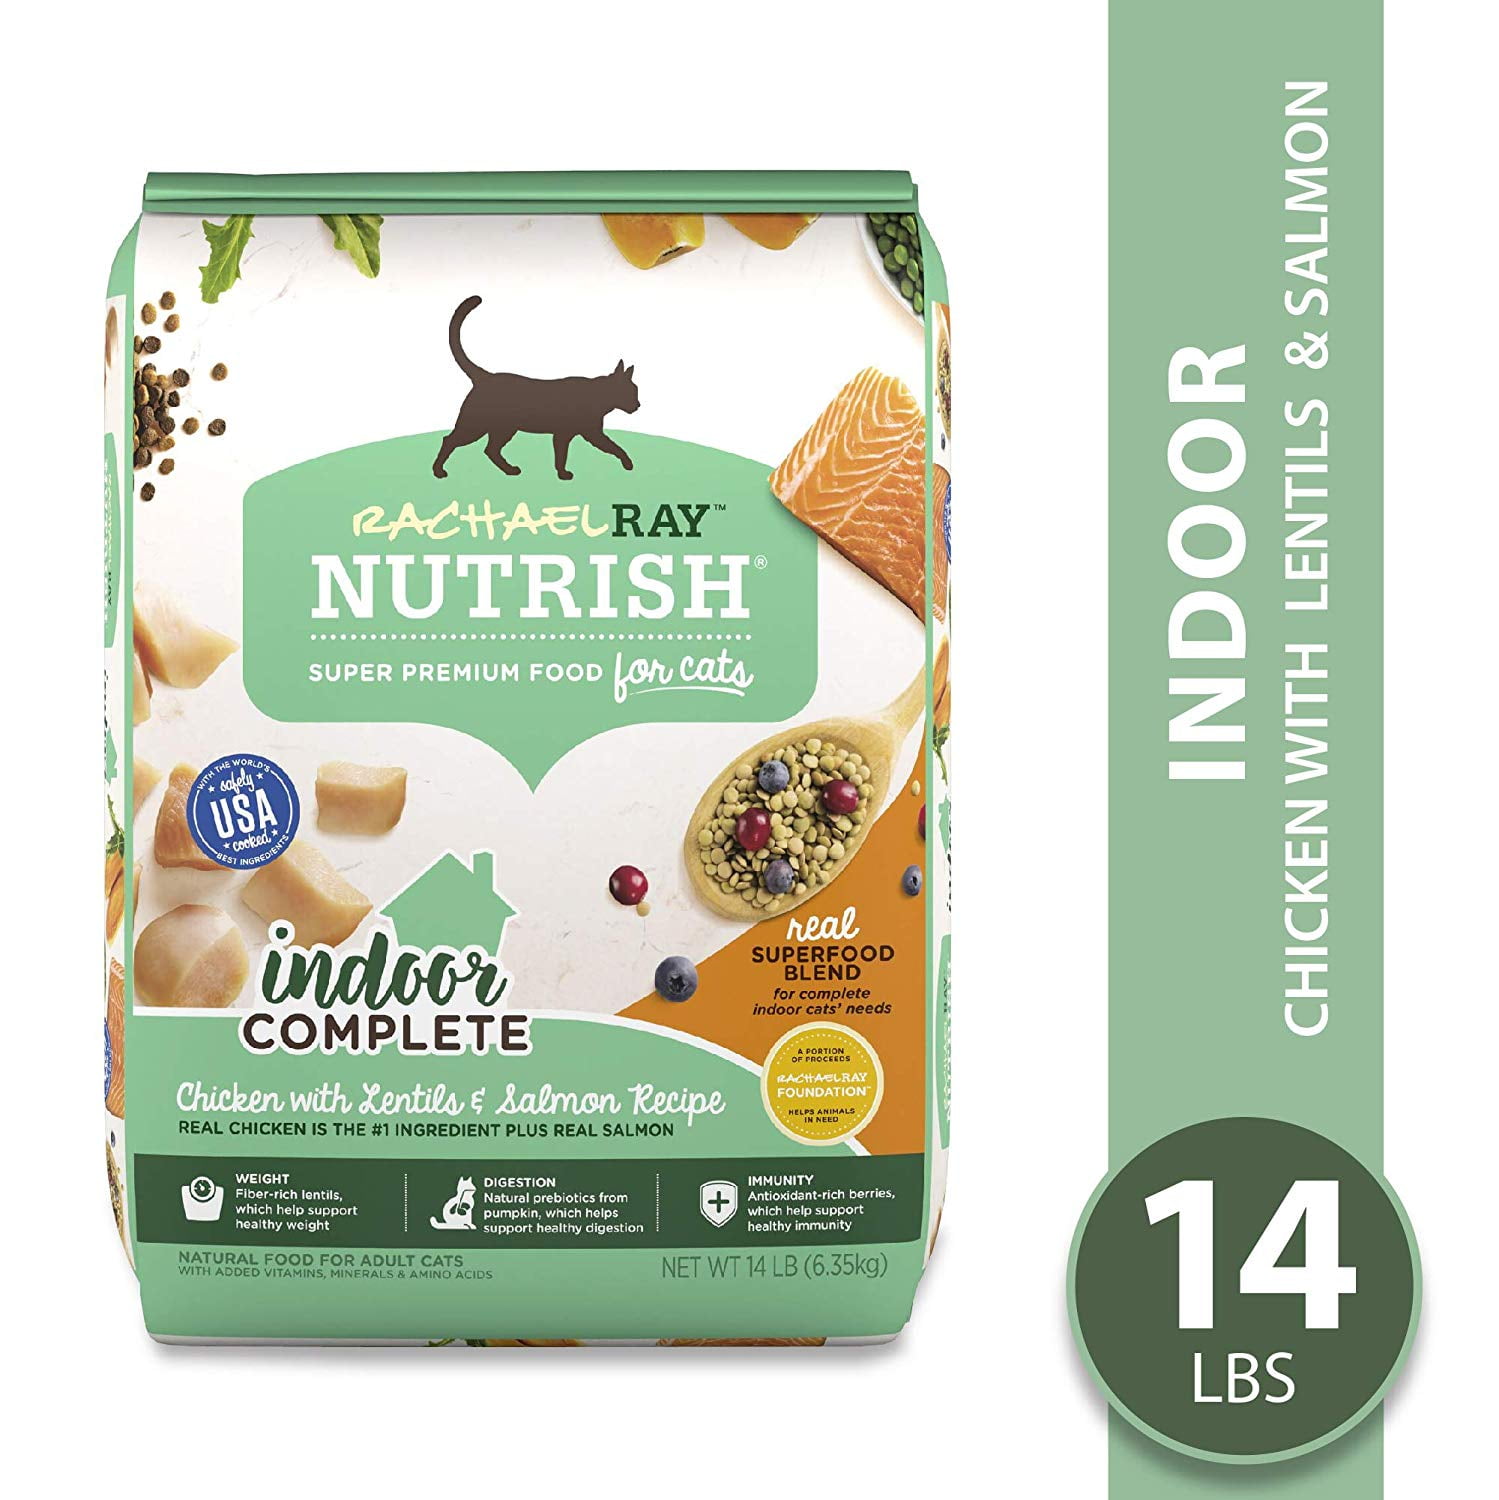 Complete with natural senior. Nutrish. Nutrish детское питание. Super Premium Dry food for Cats. Nutrish Нидерландия.